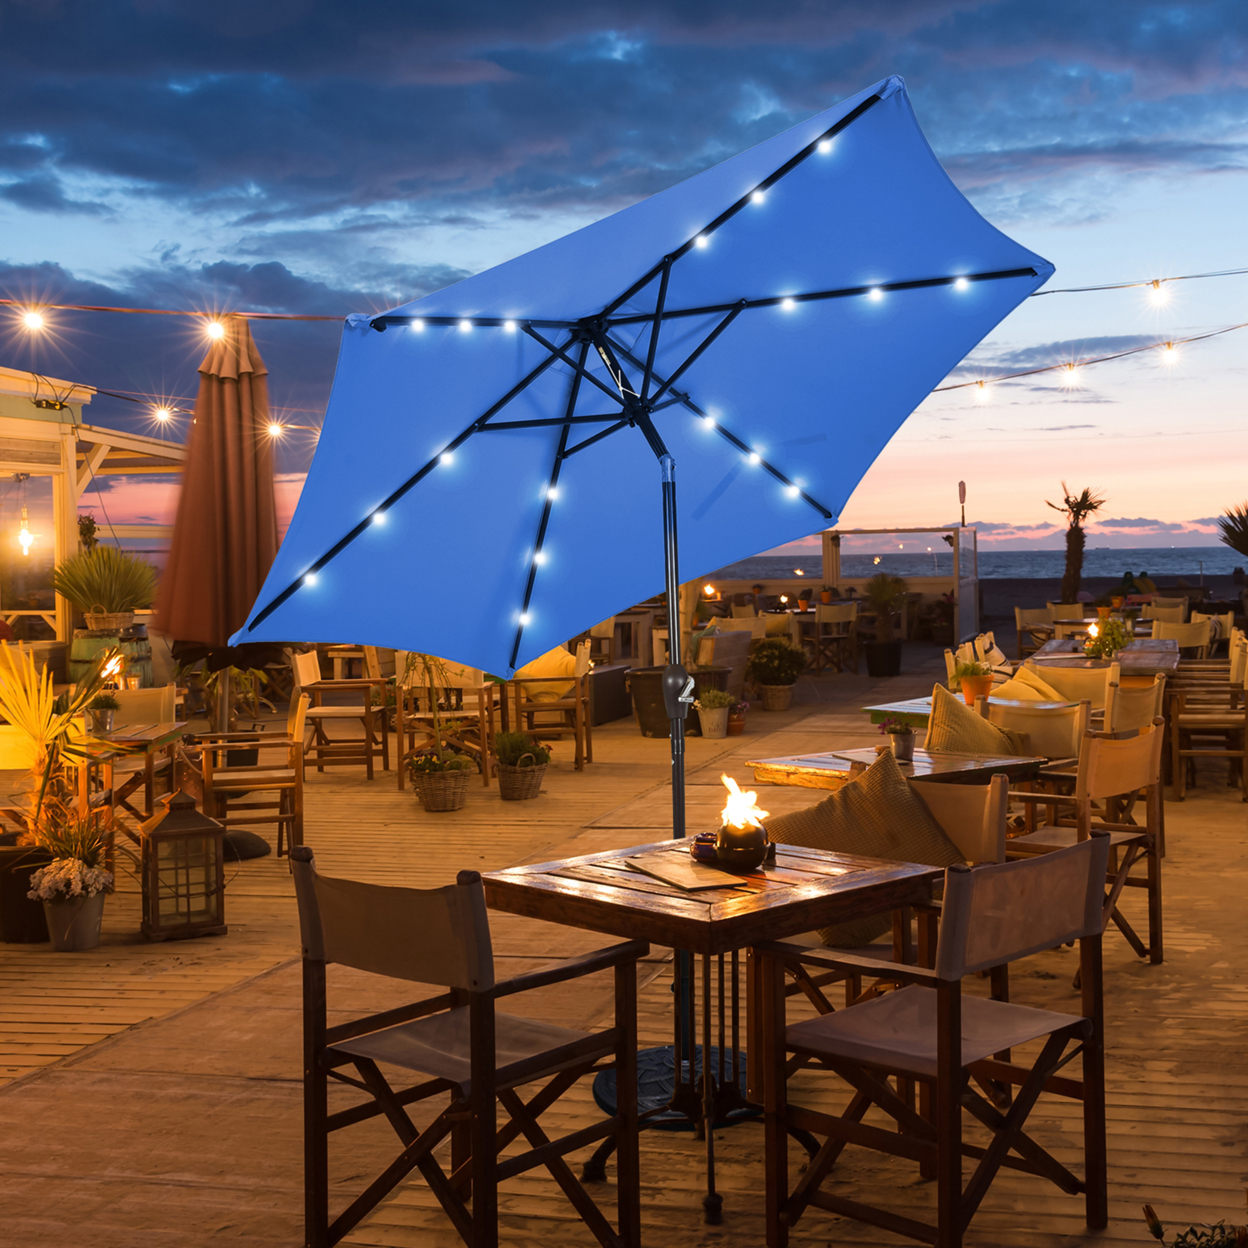 9 Ft Patio Table Market Umbrella Yard Outdoor W/ Solar LED Lights - Blue